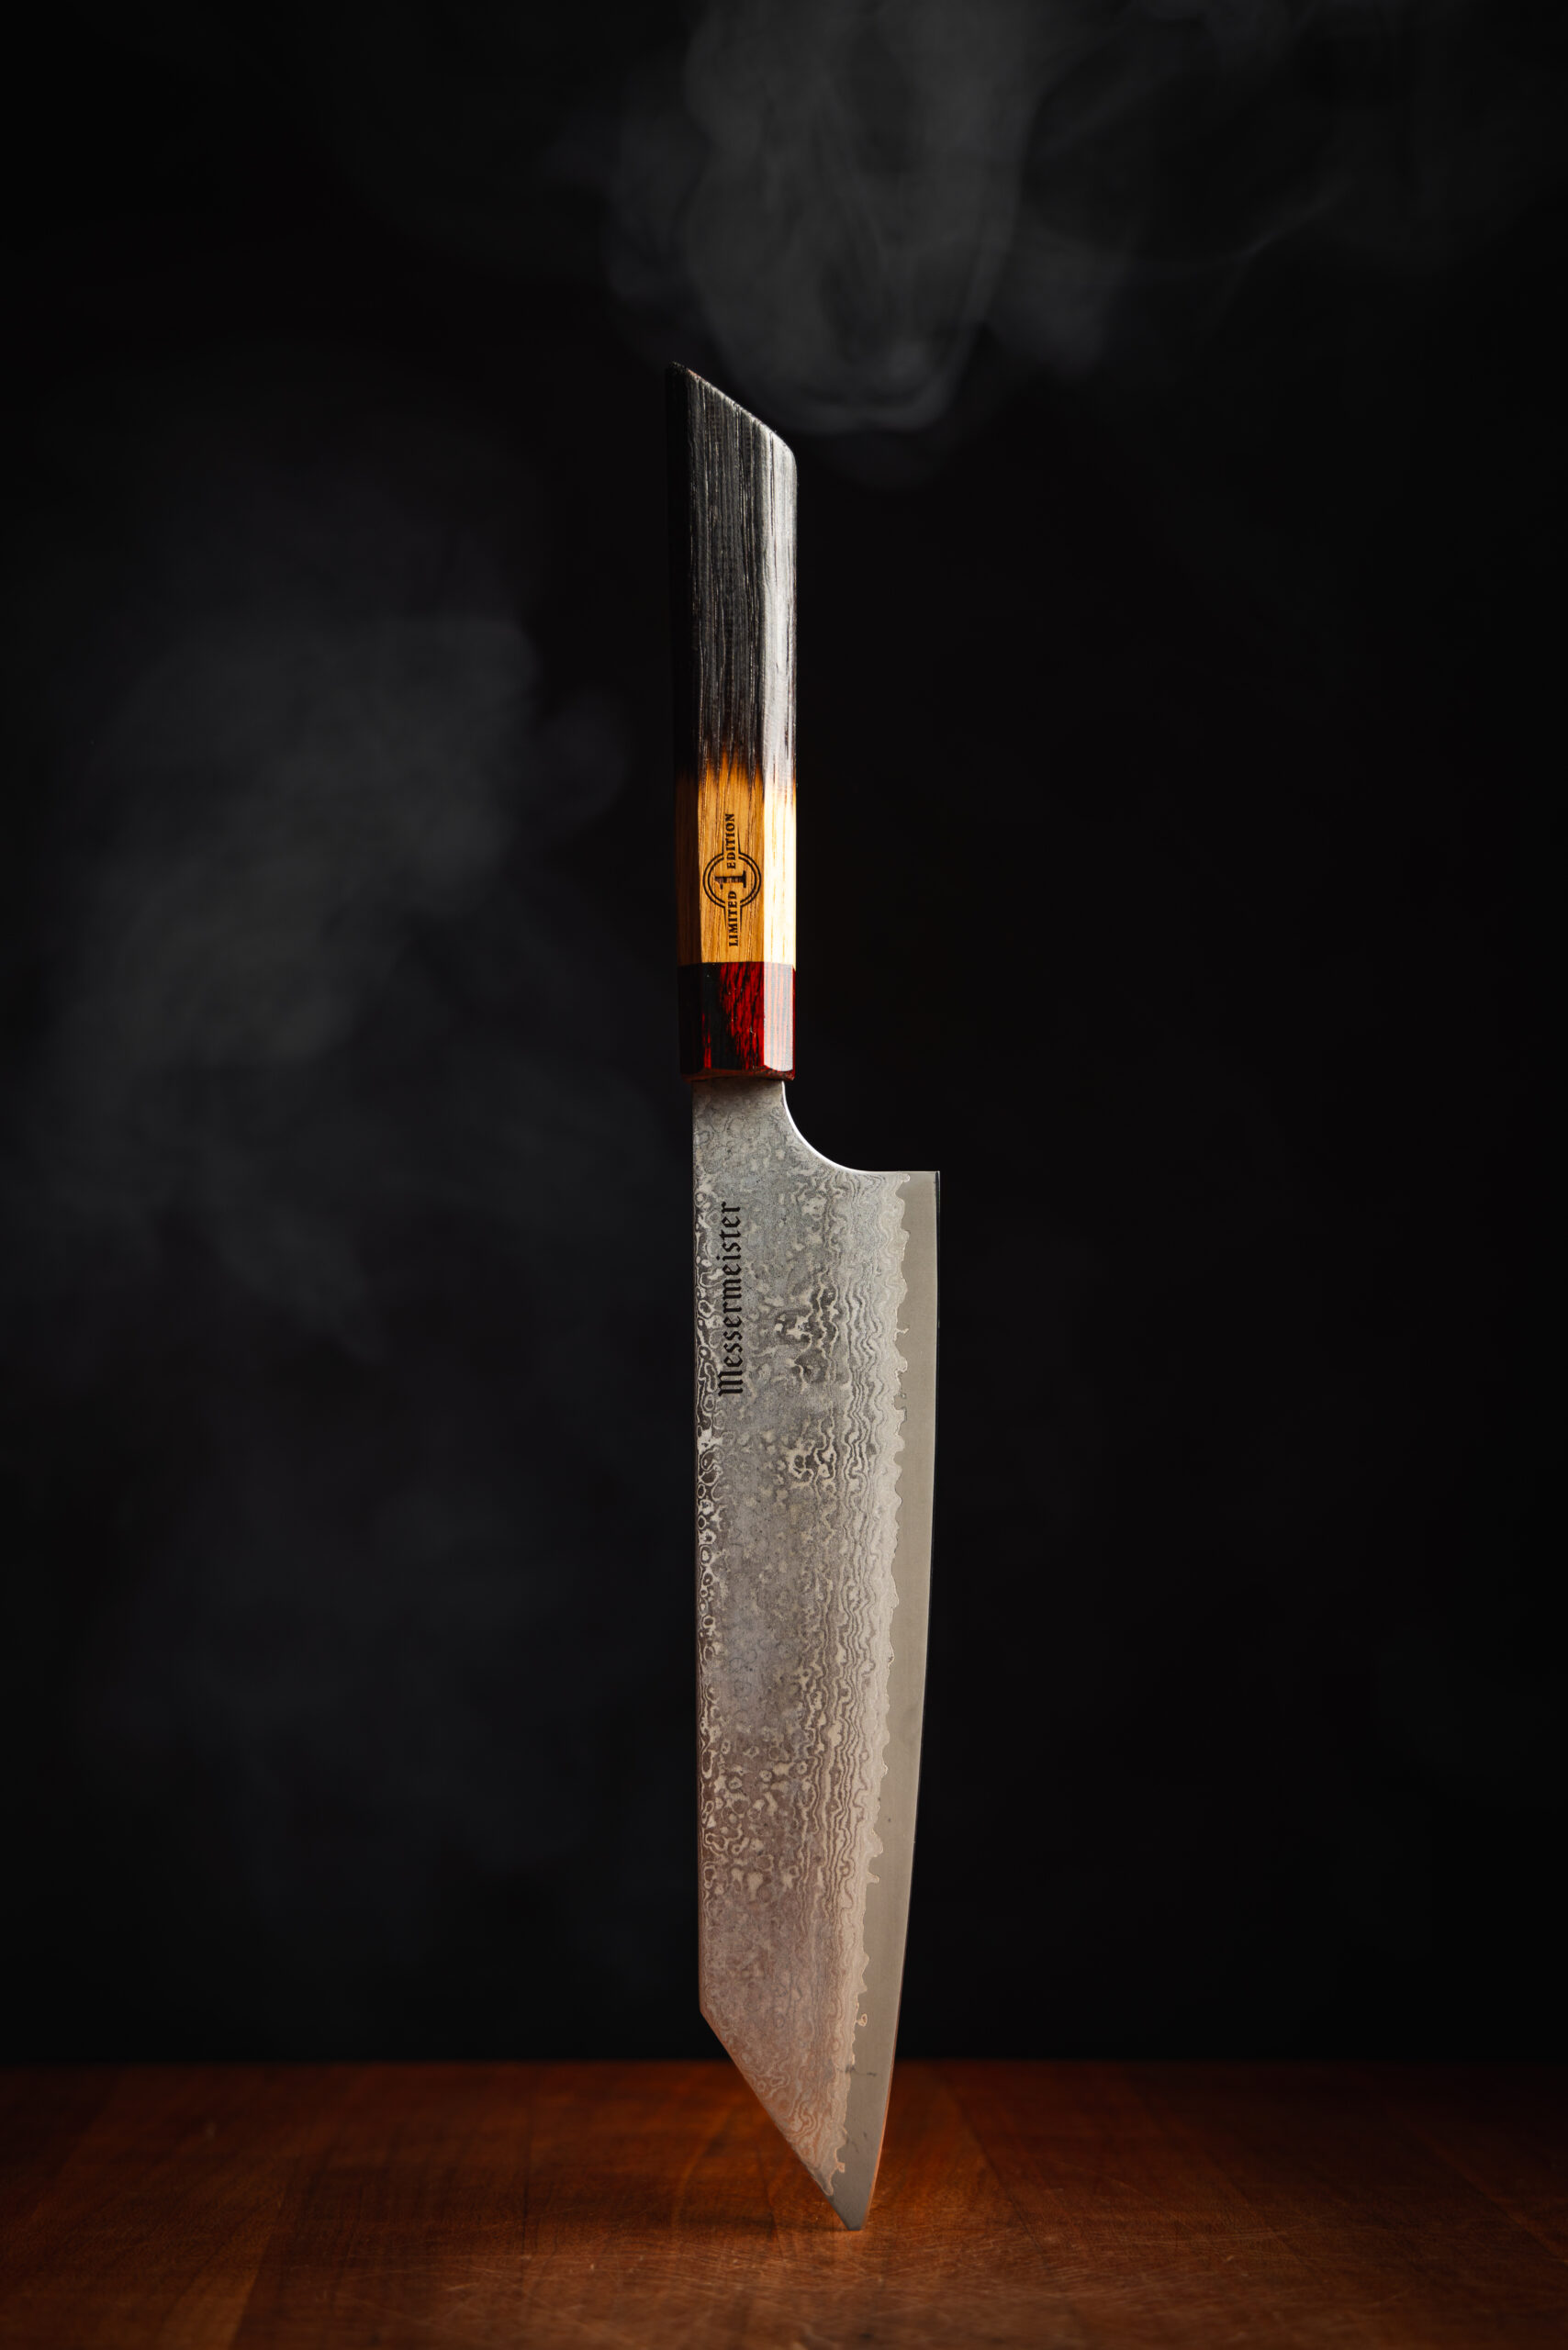 Reclaimed Maker’s Mark Barrel Used in New Messermeister Knife Collaboration